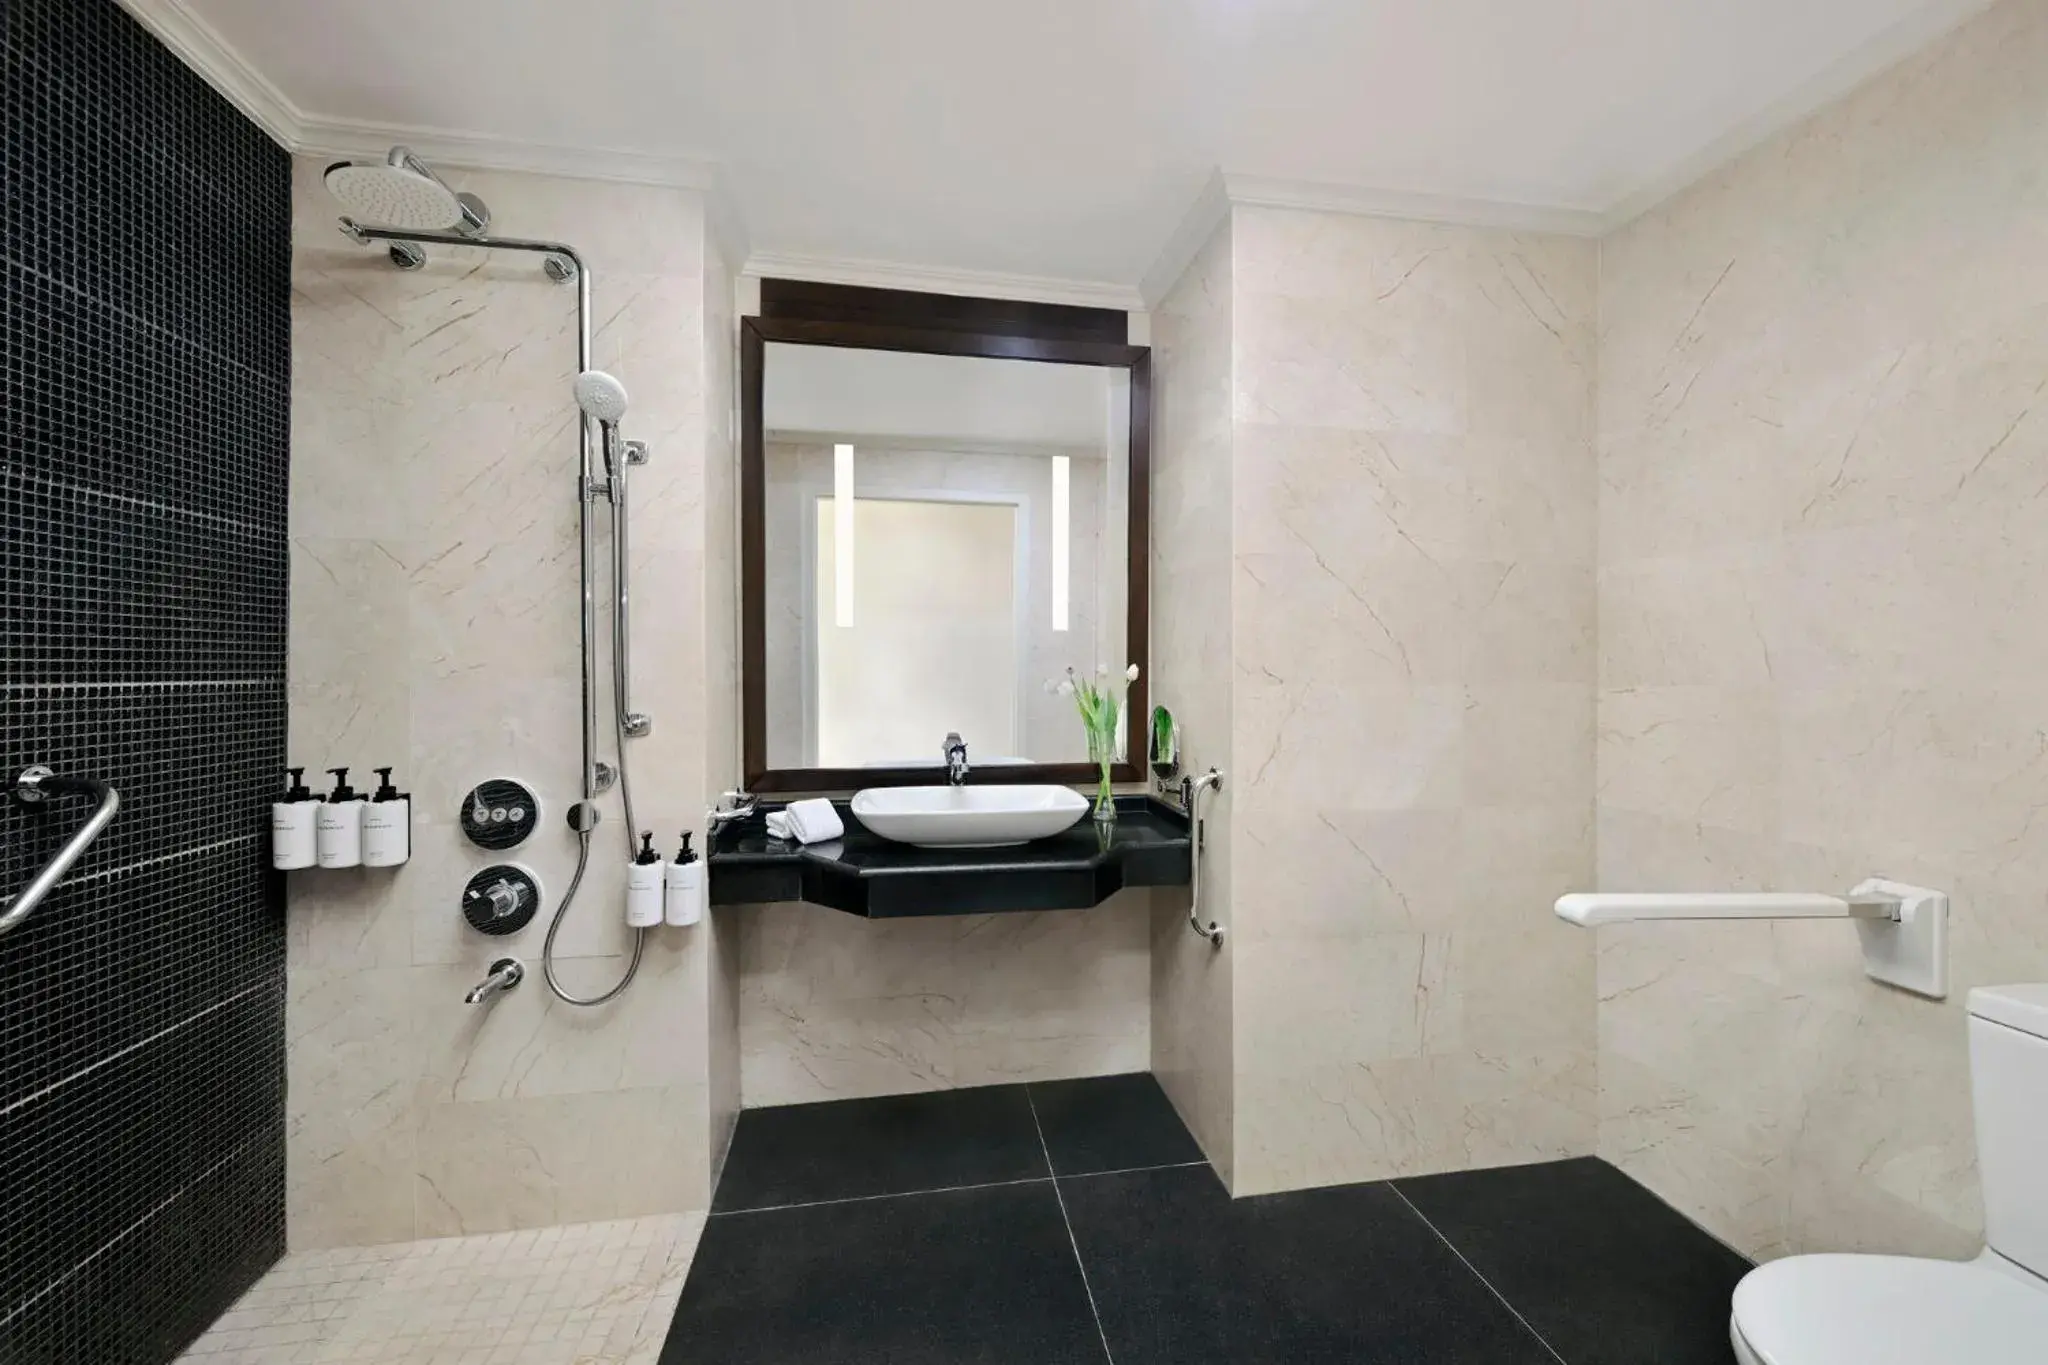 Photo of the whole room, Bathroom in Dar Al Iman InterContinental